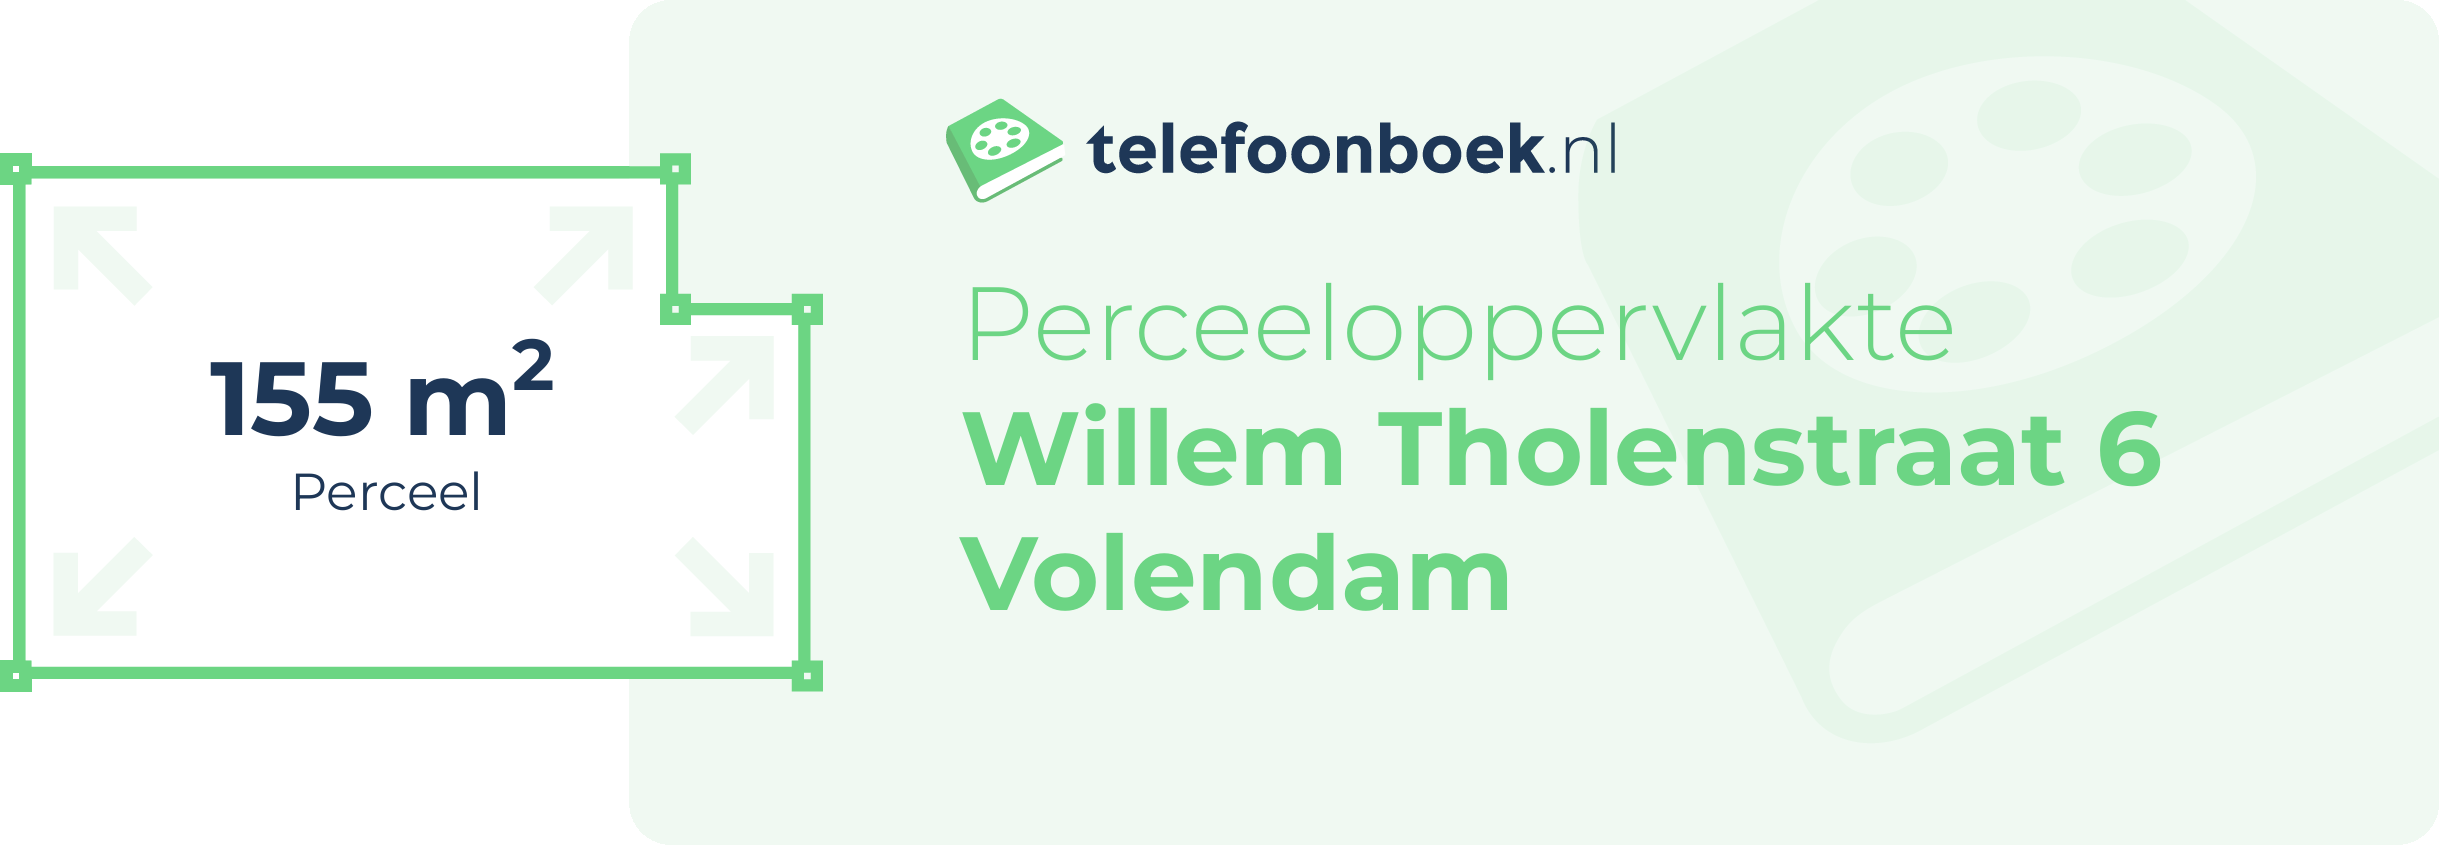 Perceeloppervlakte Willem Tholenstraat 6 Volendam